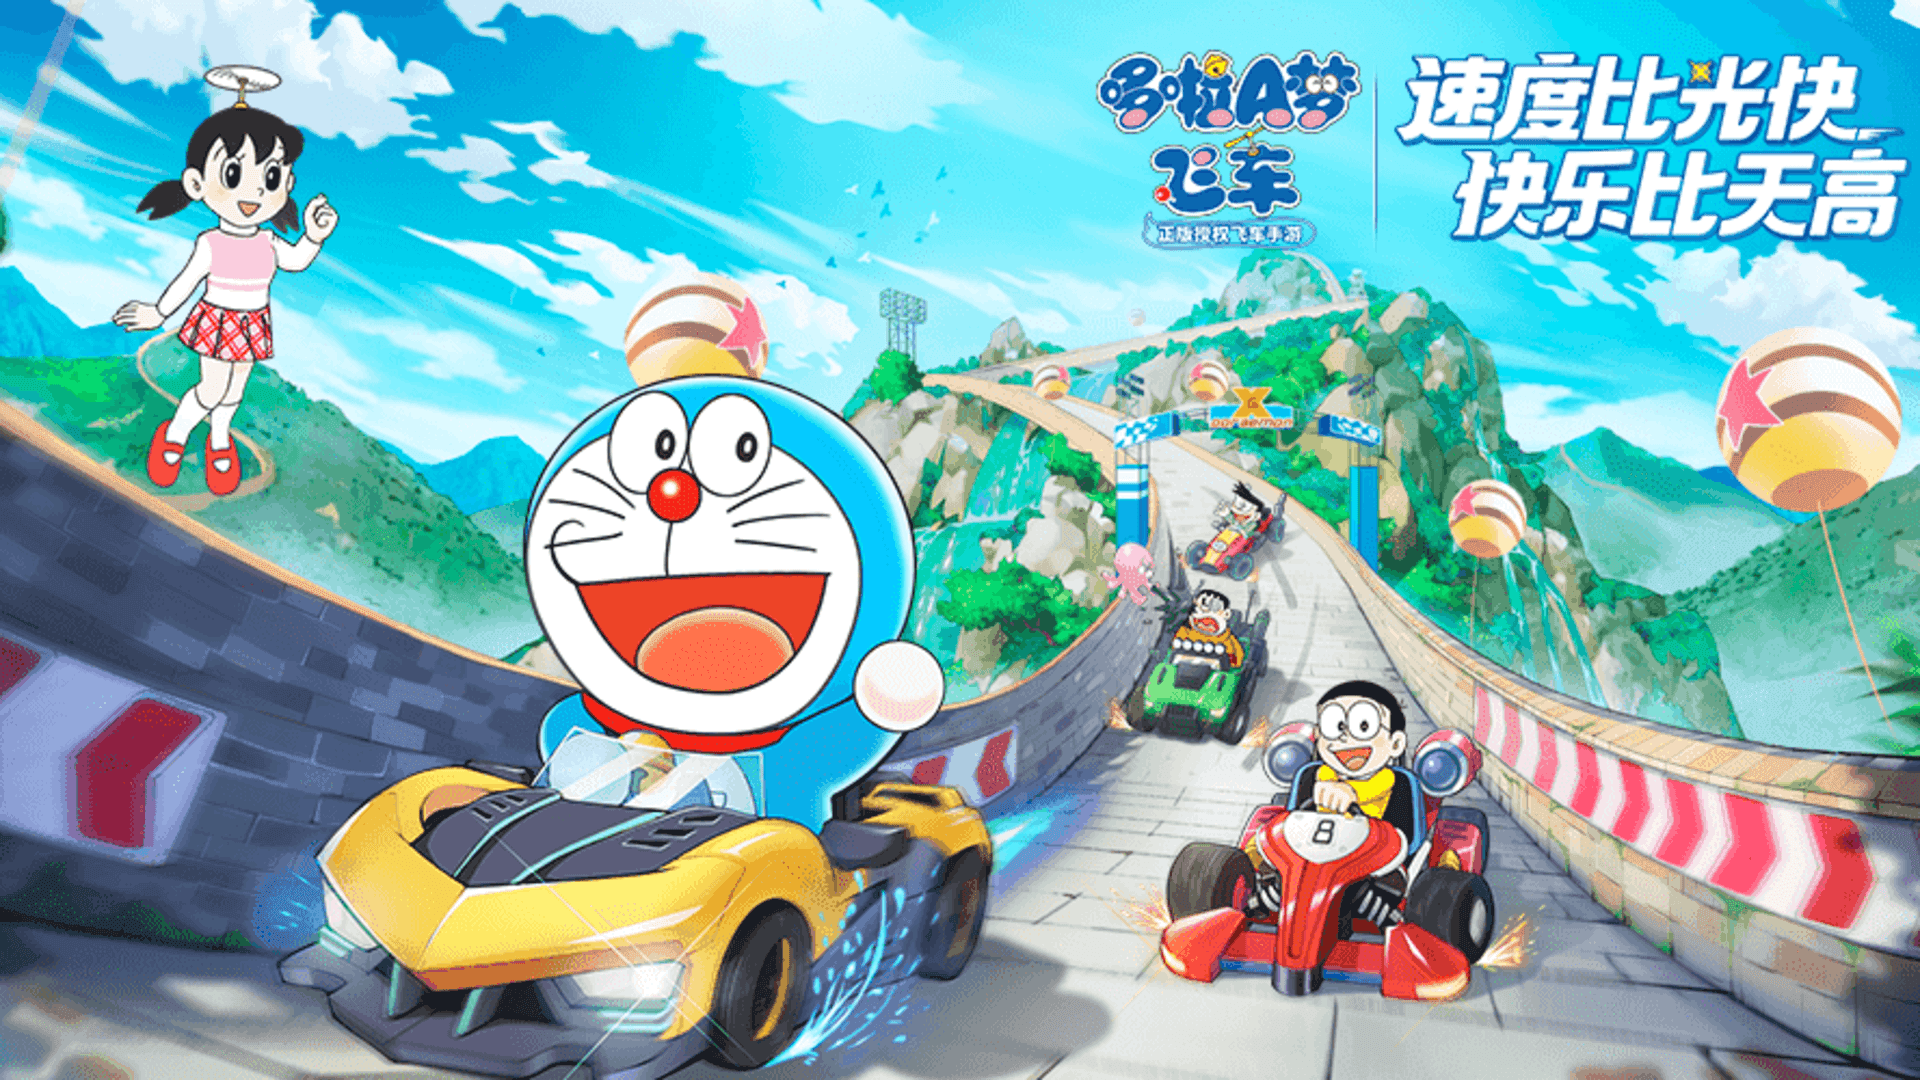 Banner of Velocidad Doraemon 